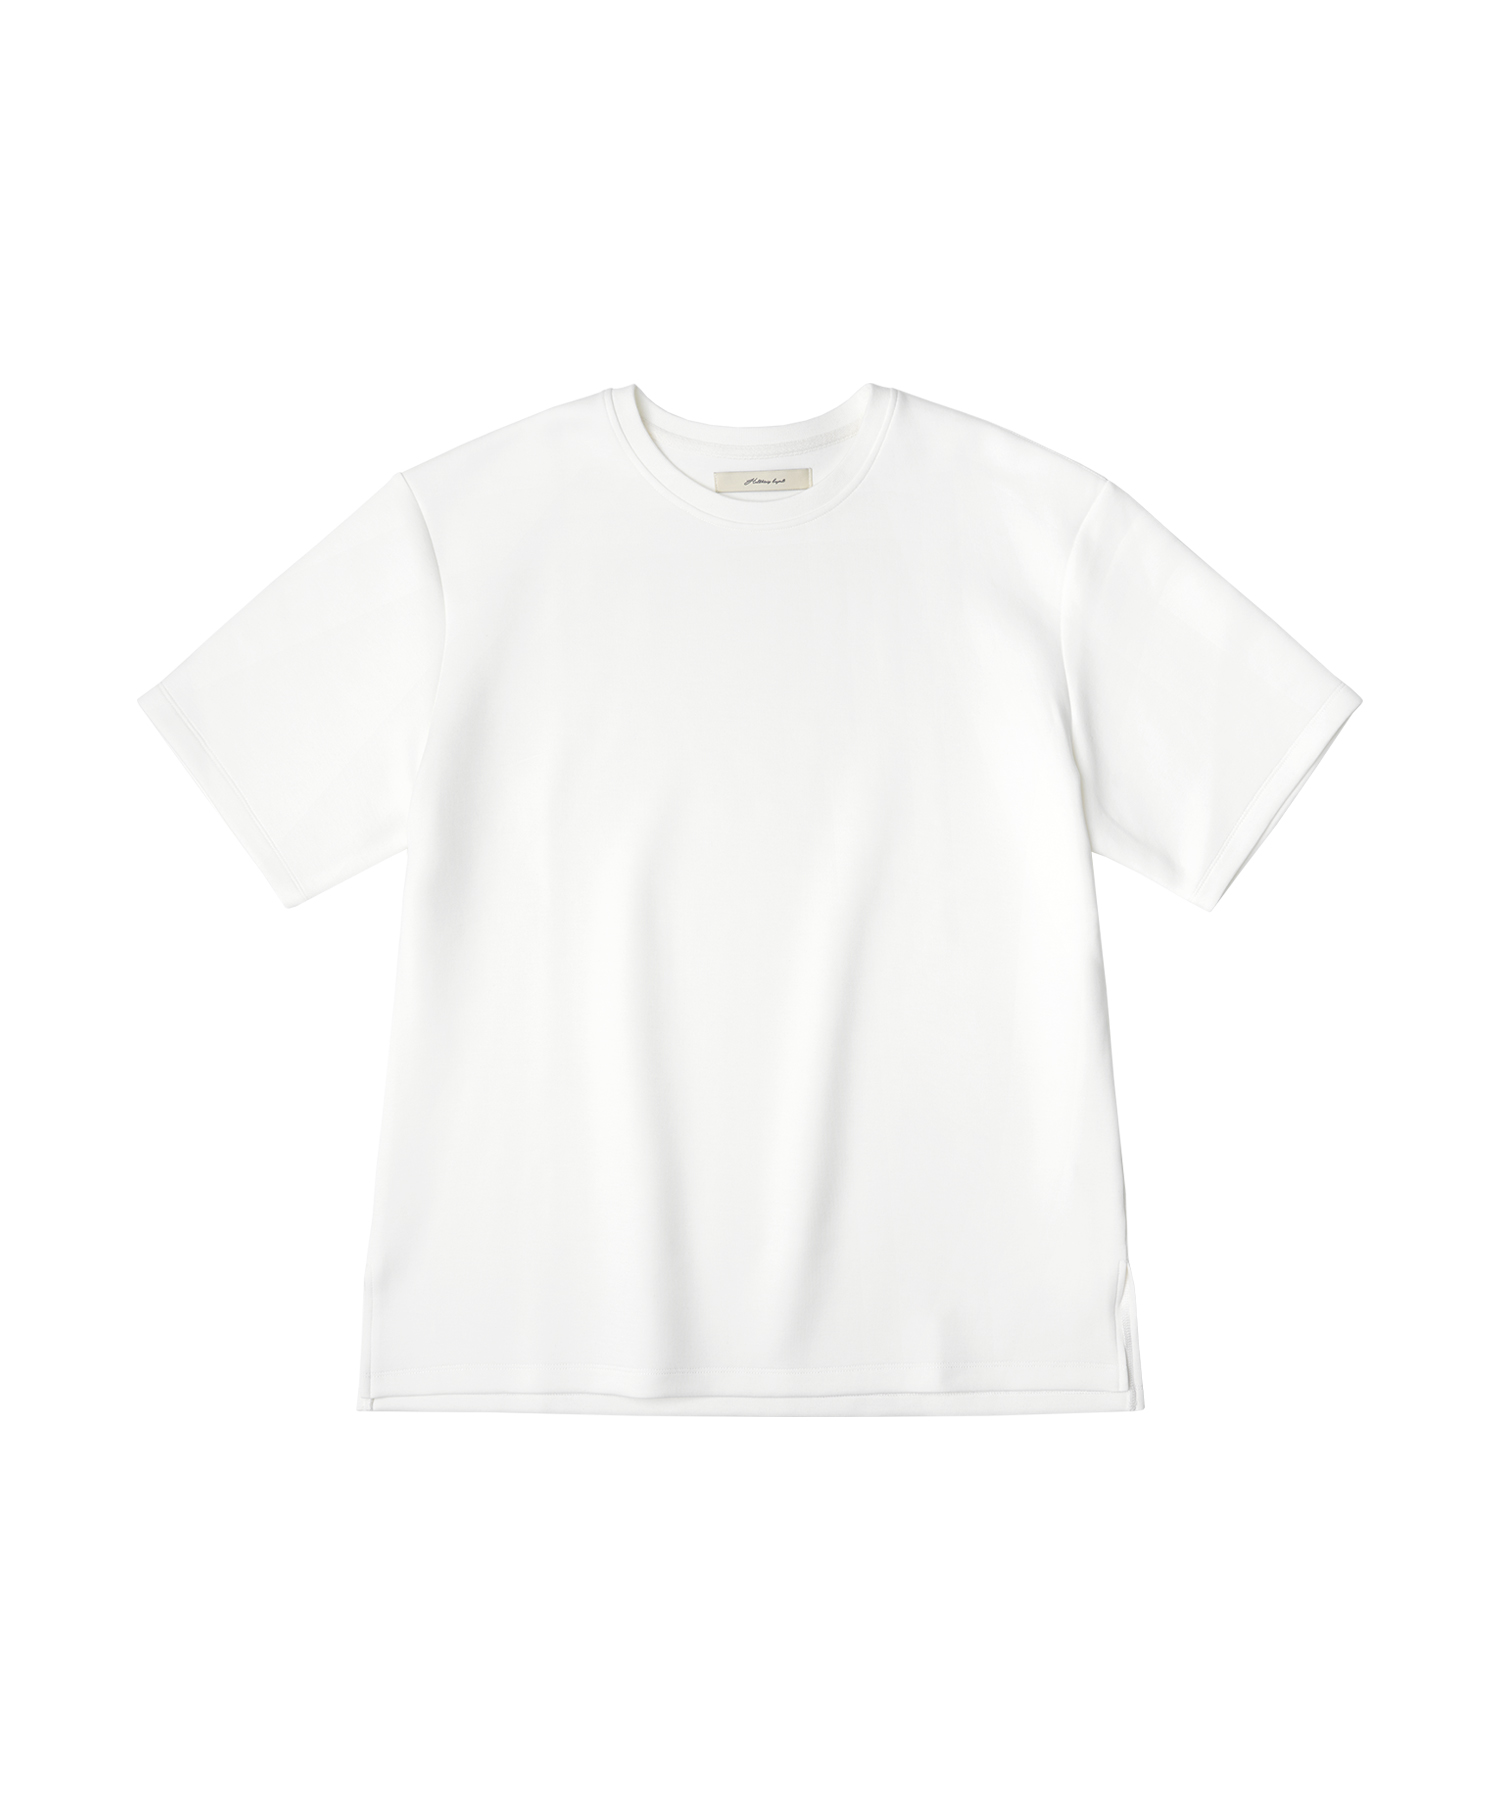 T20034 에센셜 루즈핏 반팔 티셔츠_White